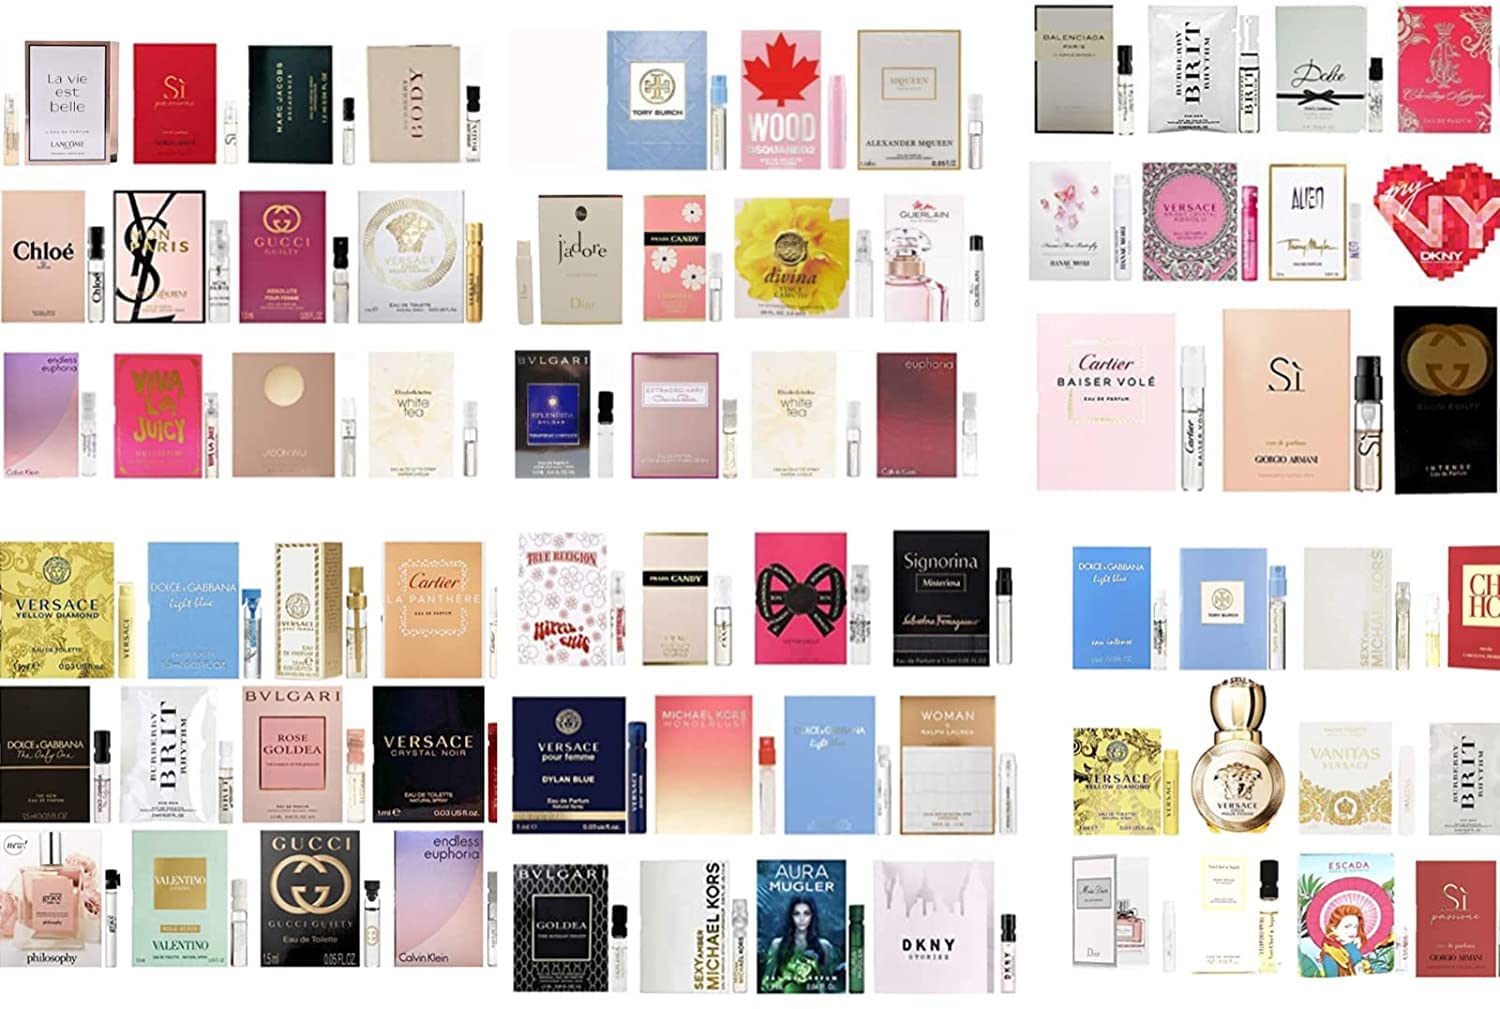 PureScents Women's Designer Fragrance sampler set - 10 Designer Perfume Vials